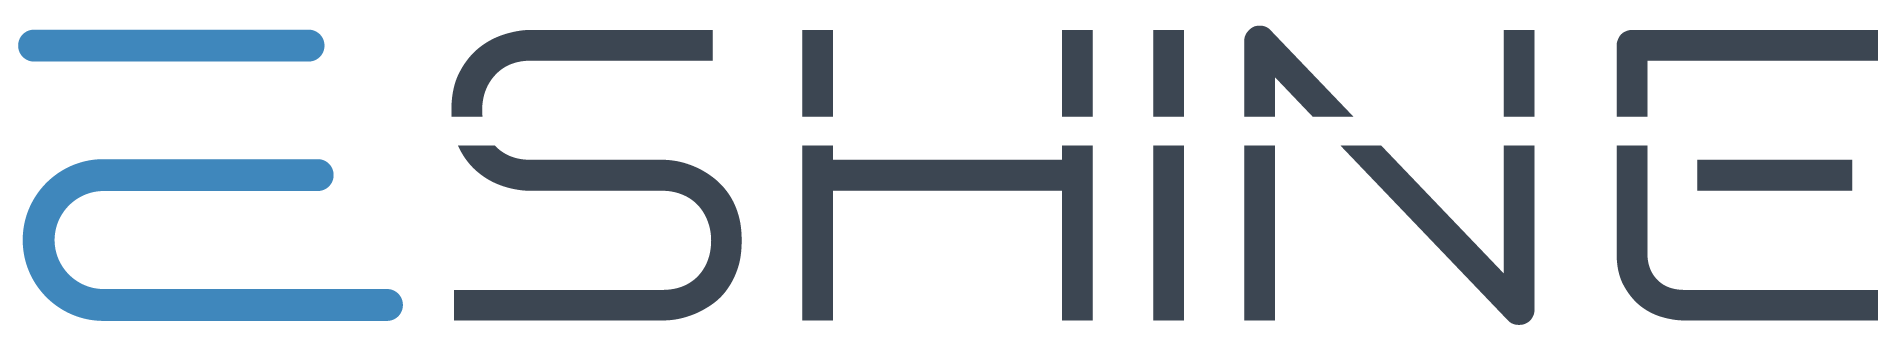 eshine logo